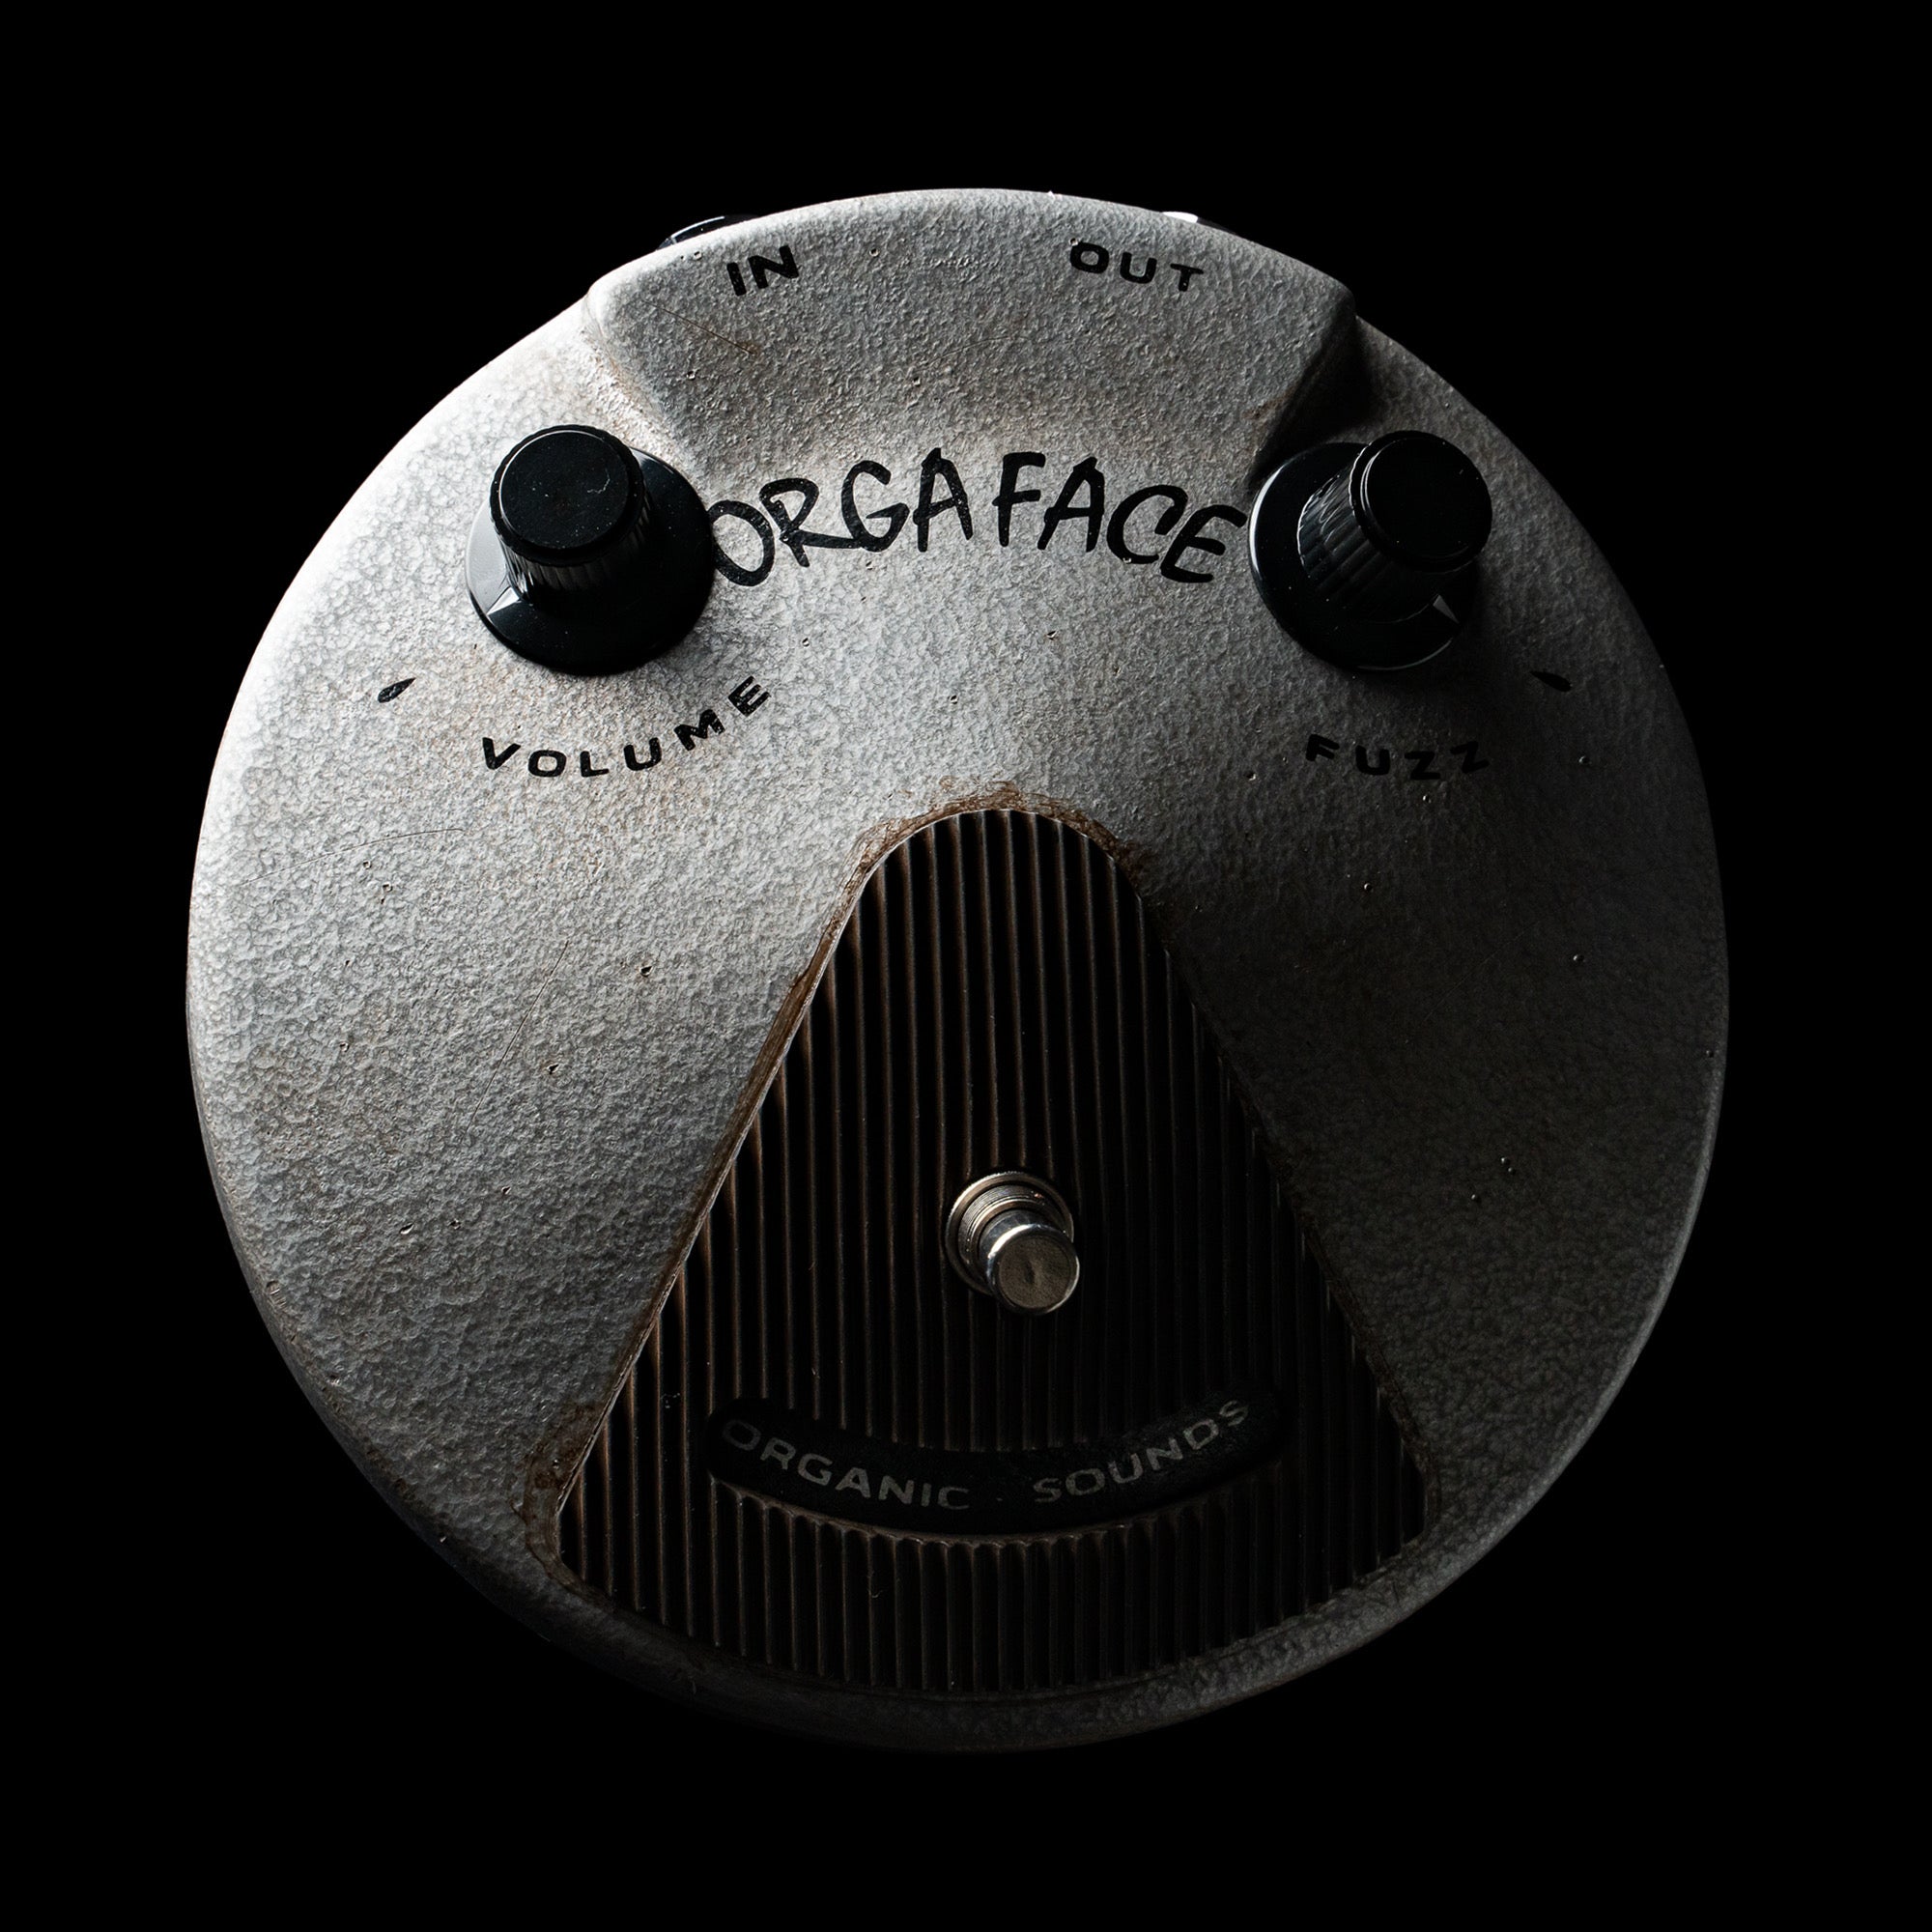 ORGA FACE 66 NKT274 / Aged Silver | Organic Sounds